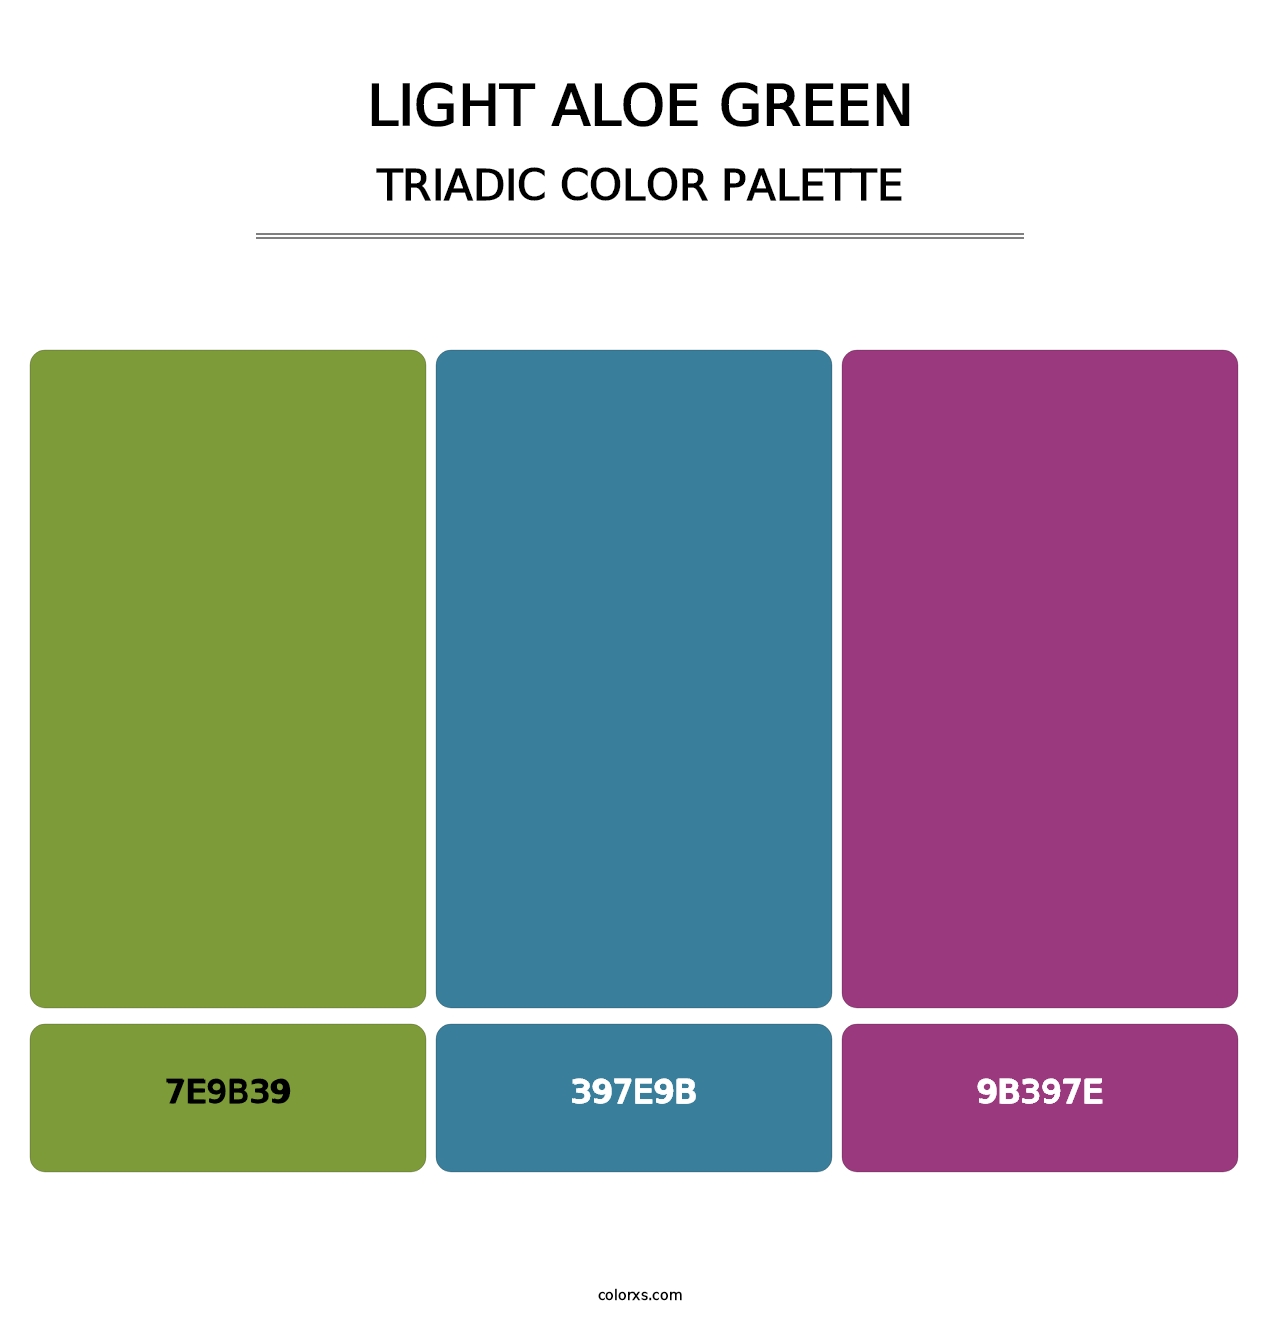 Light Aloe Green - Triadic Color Palette